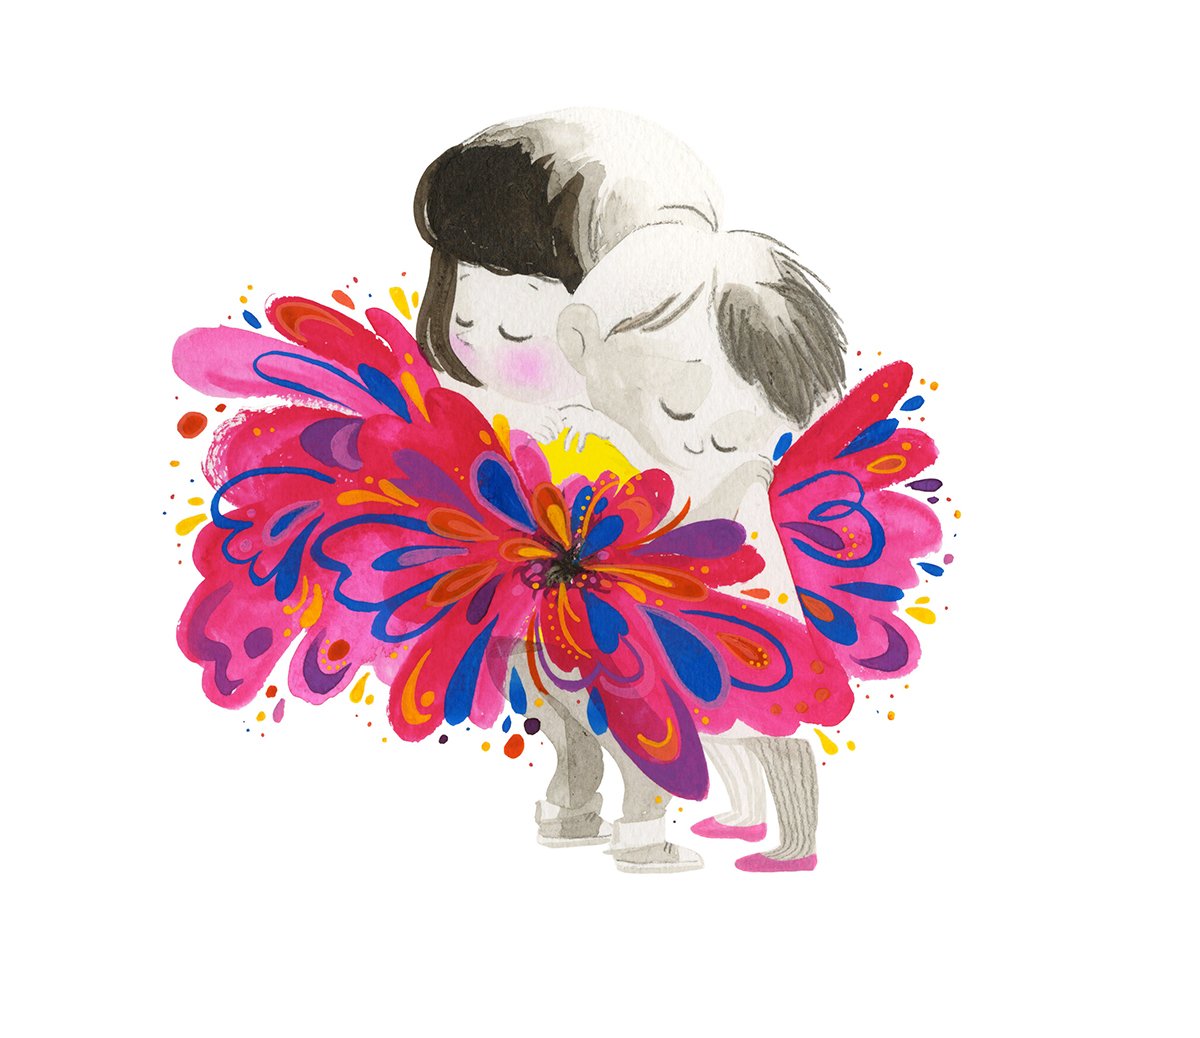 erika-meza-colour-hug-illustration.jpg